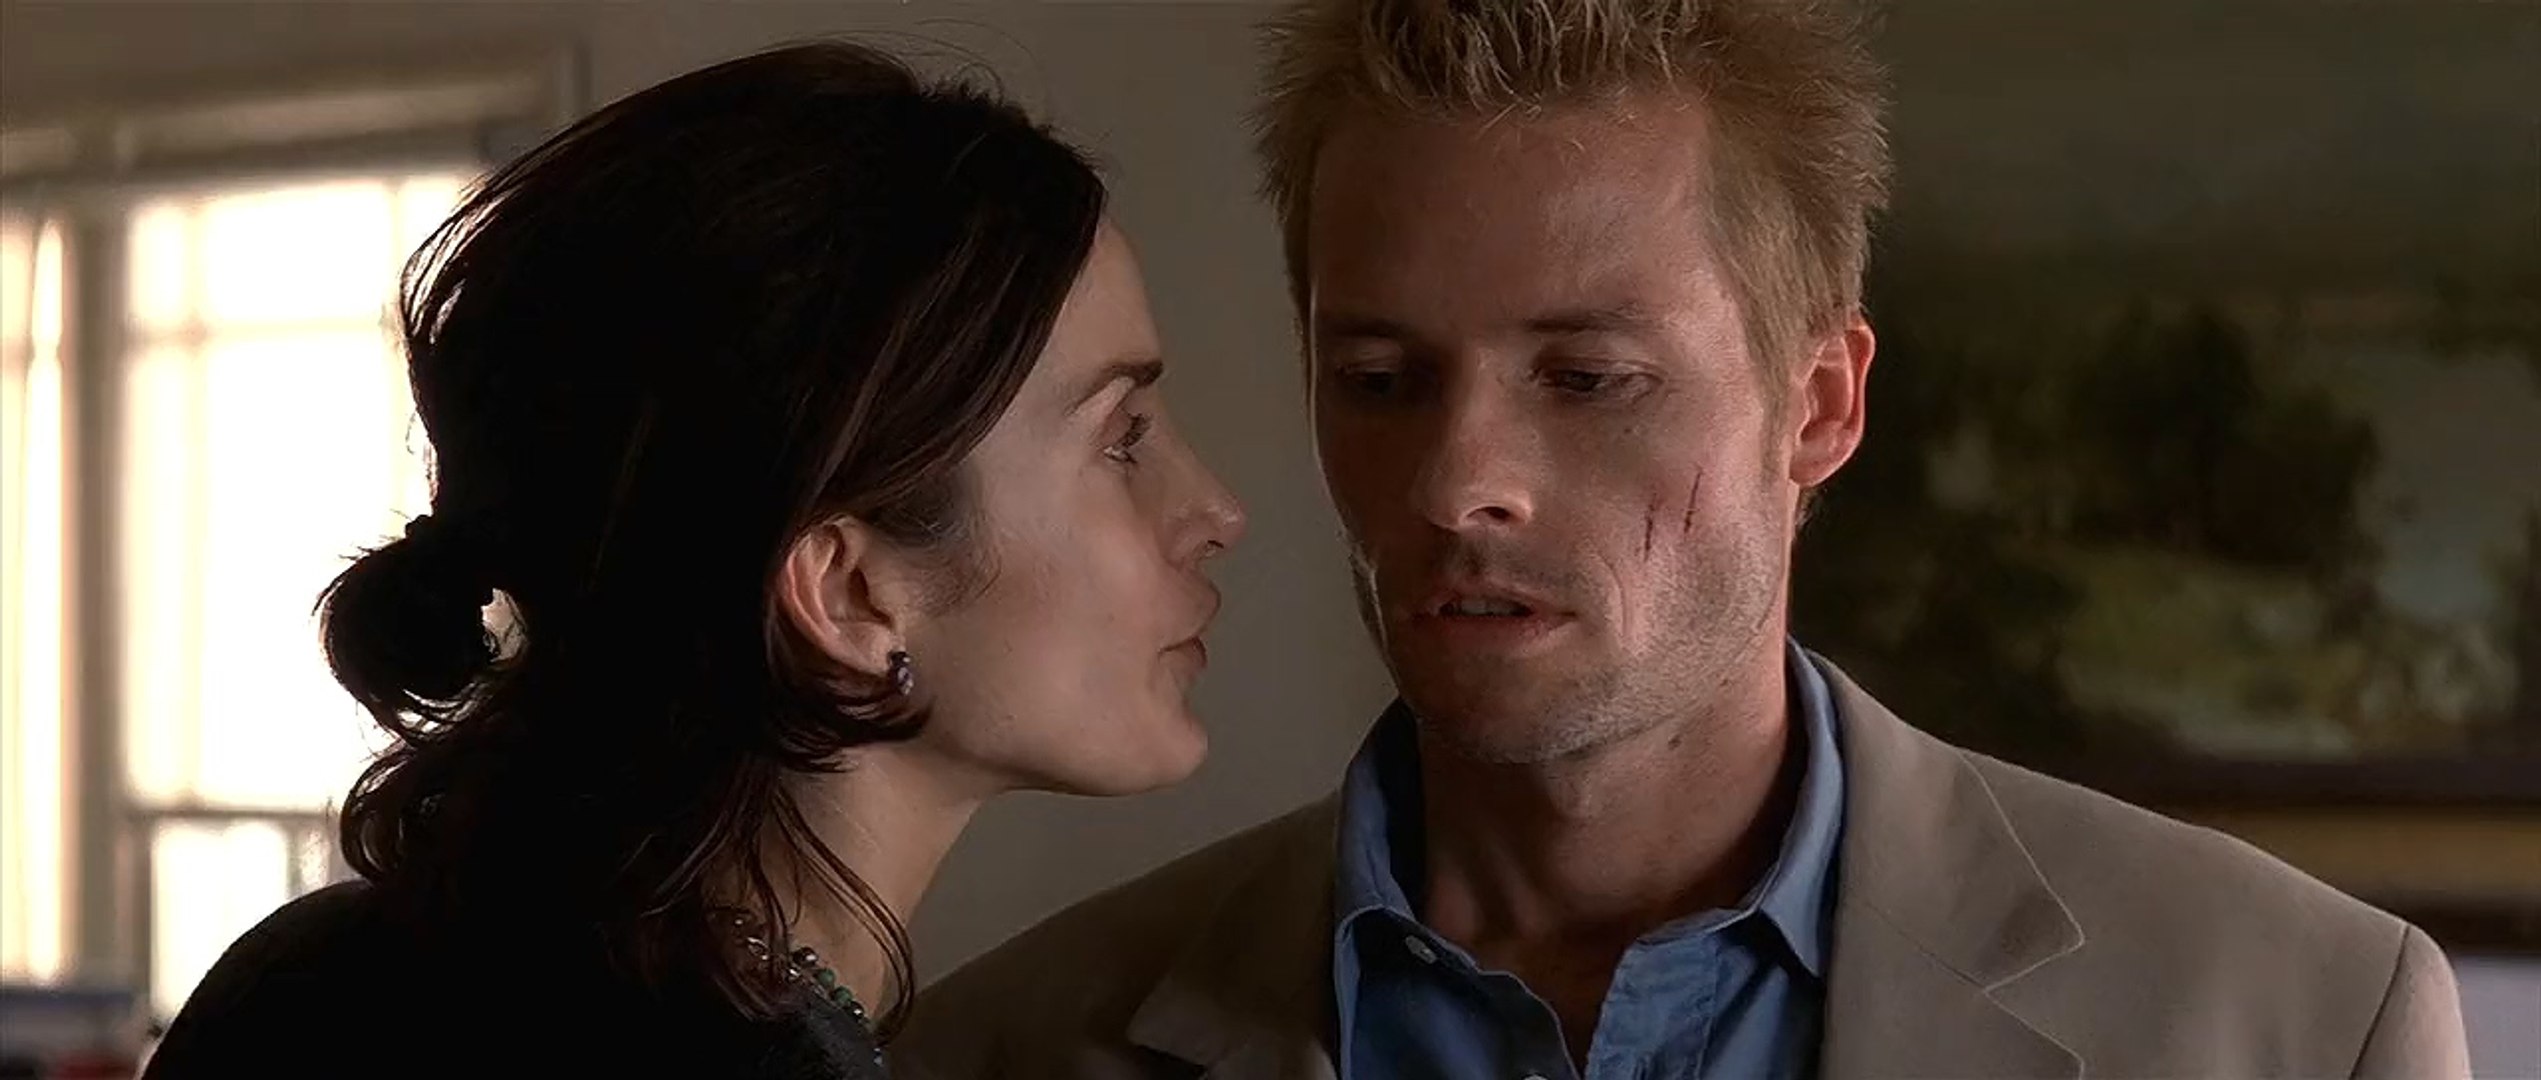 Memento movie (2000) - Guy Pearce, Carrie-Anne Moss, Joe Pantoliano - video  Dailymotion